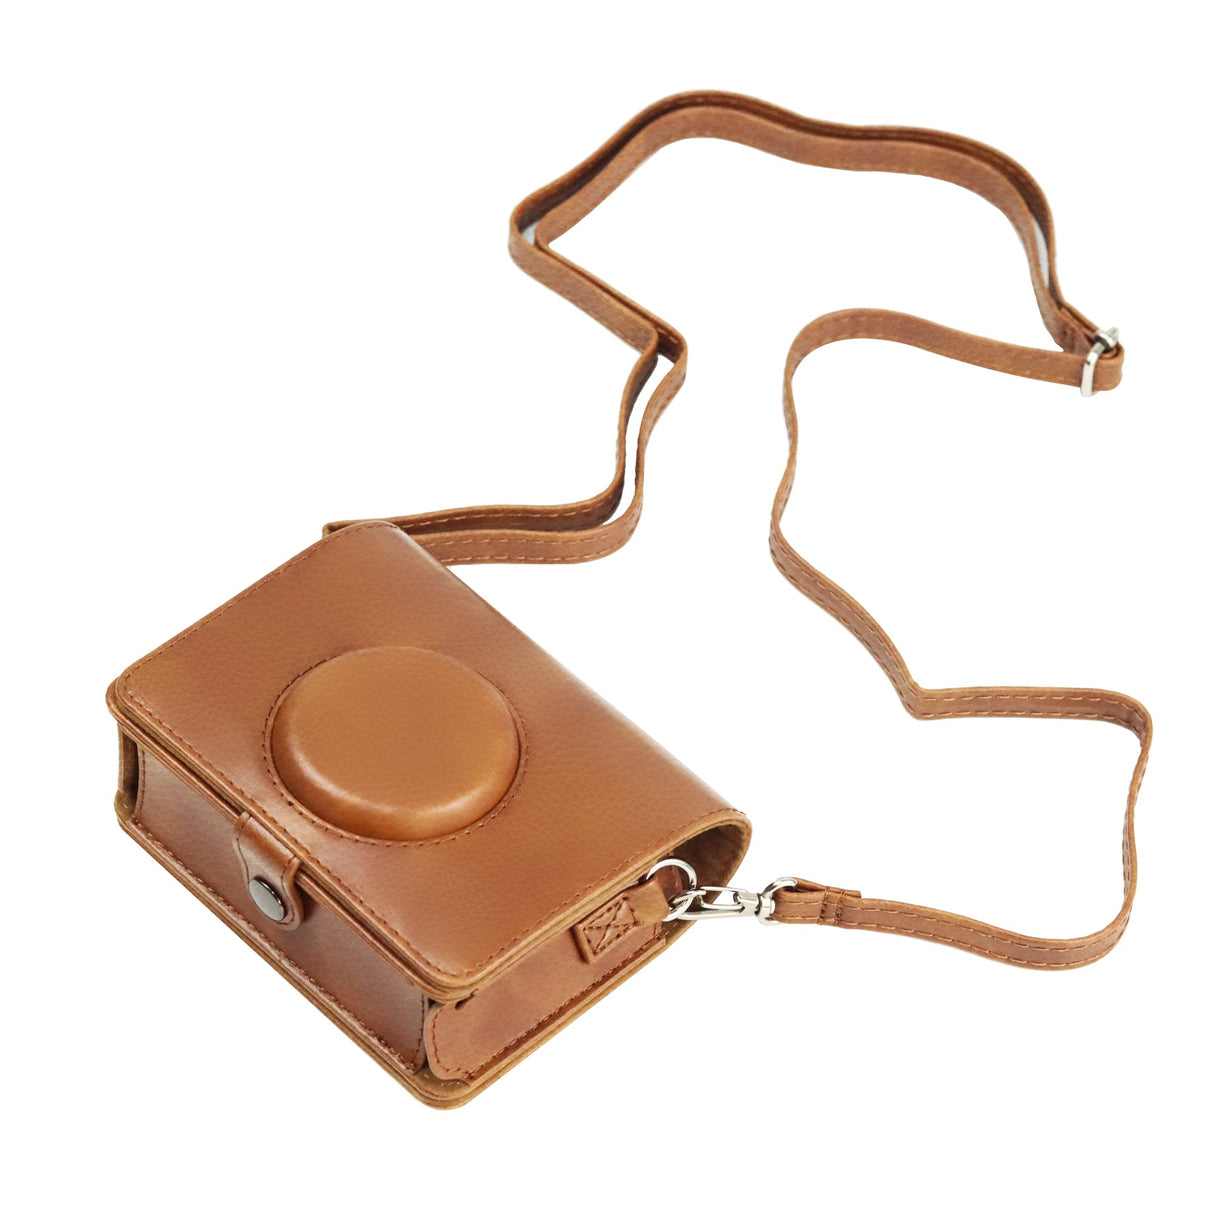 Zenko Instax mini Evo Camera PU Leather Case Bag Brown